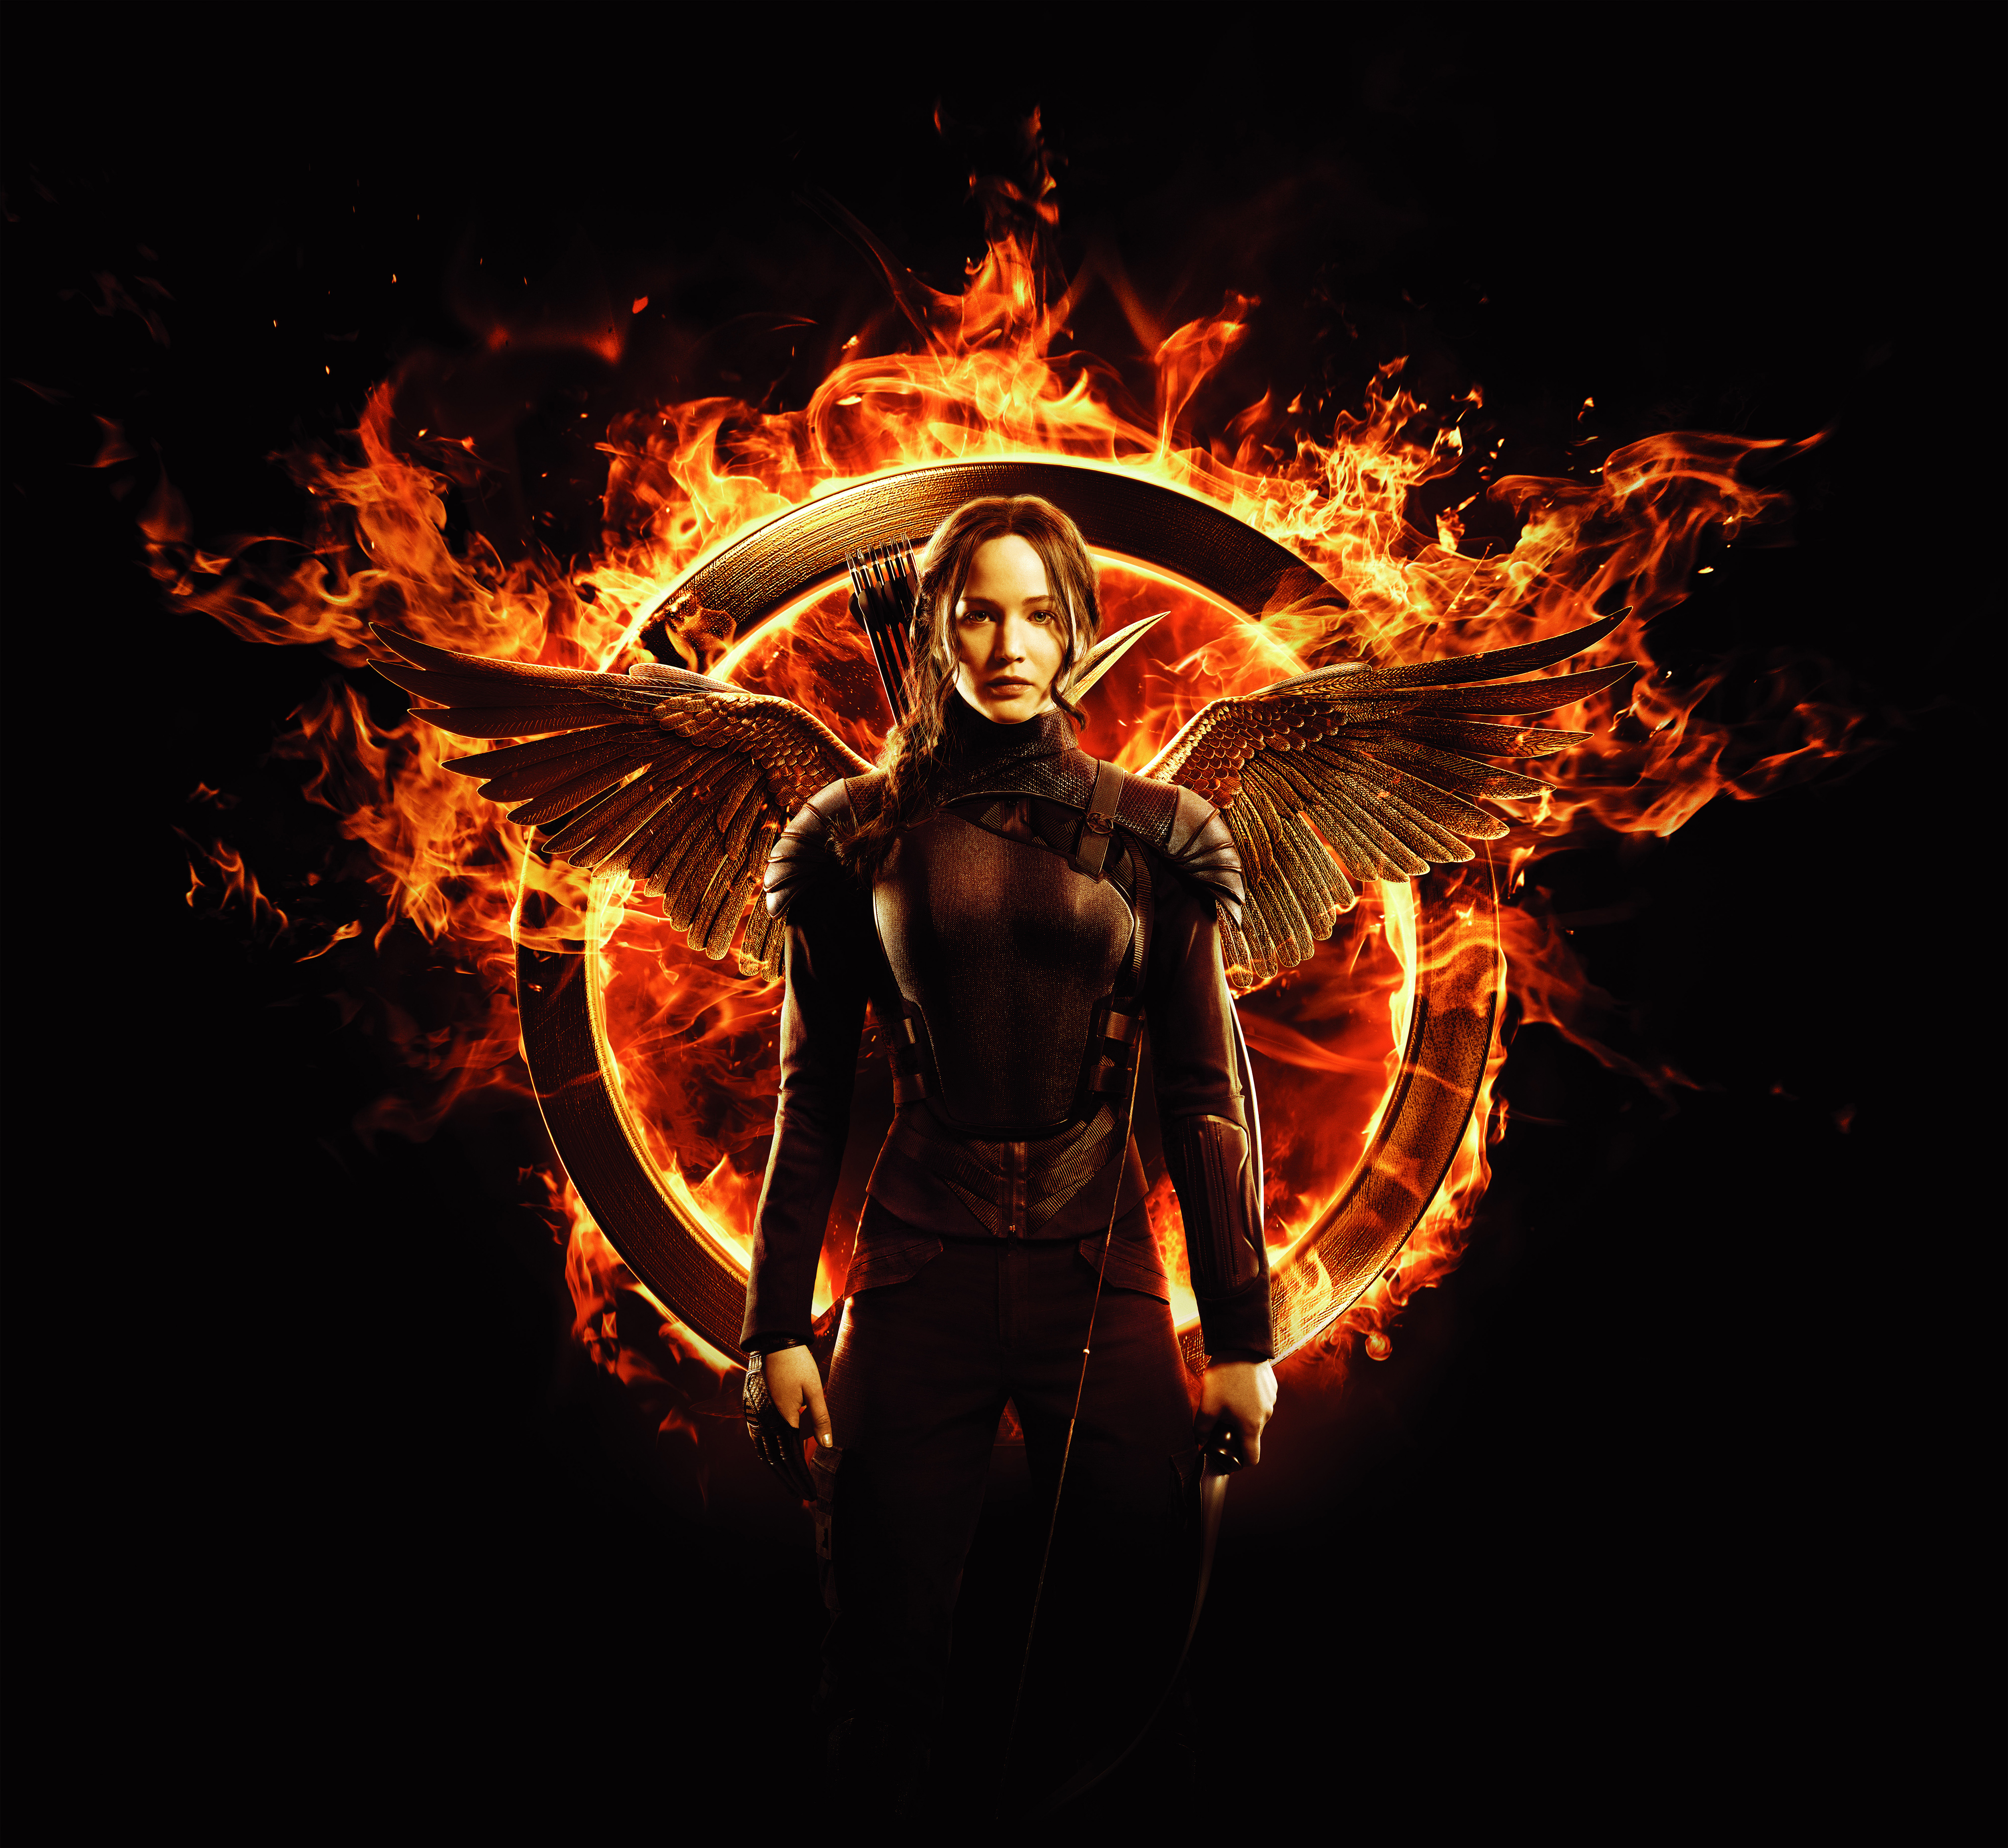 The Hunger Games Mockingjay Part 1 Logo wallpaper Gallery